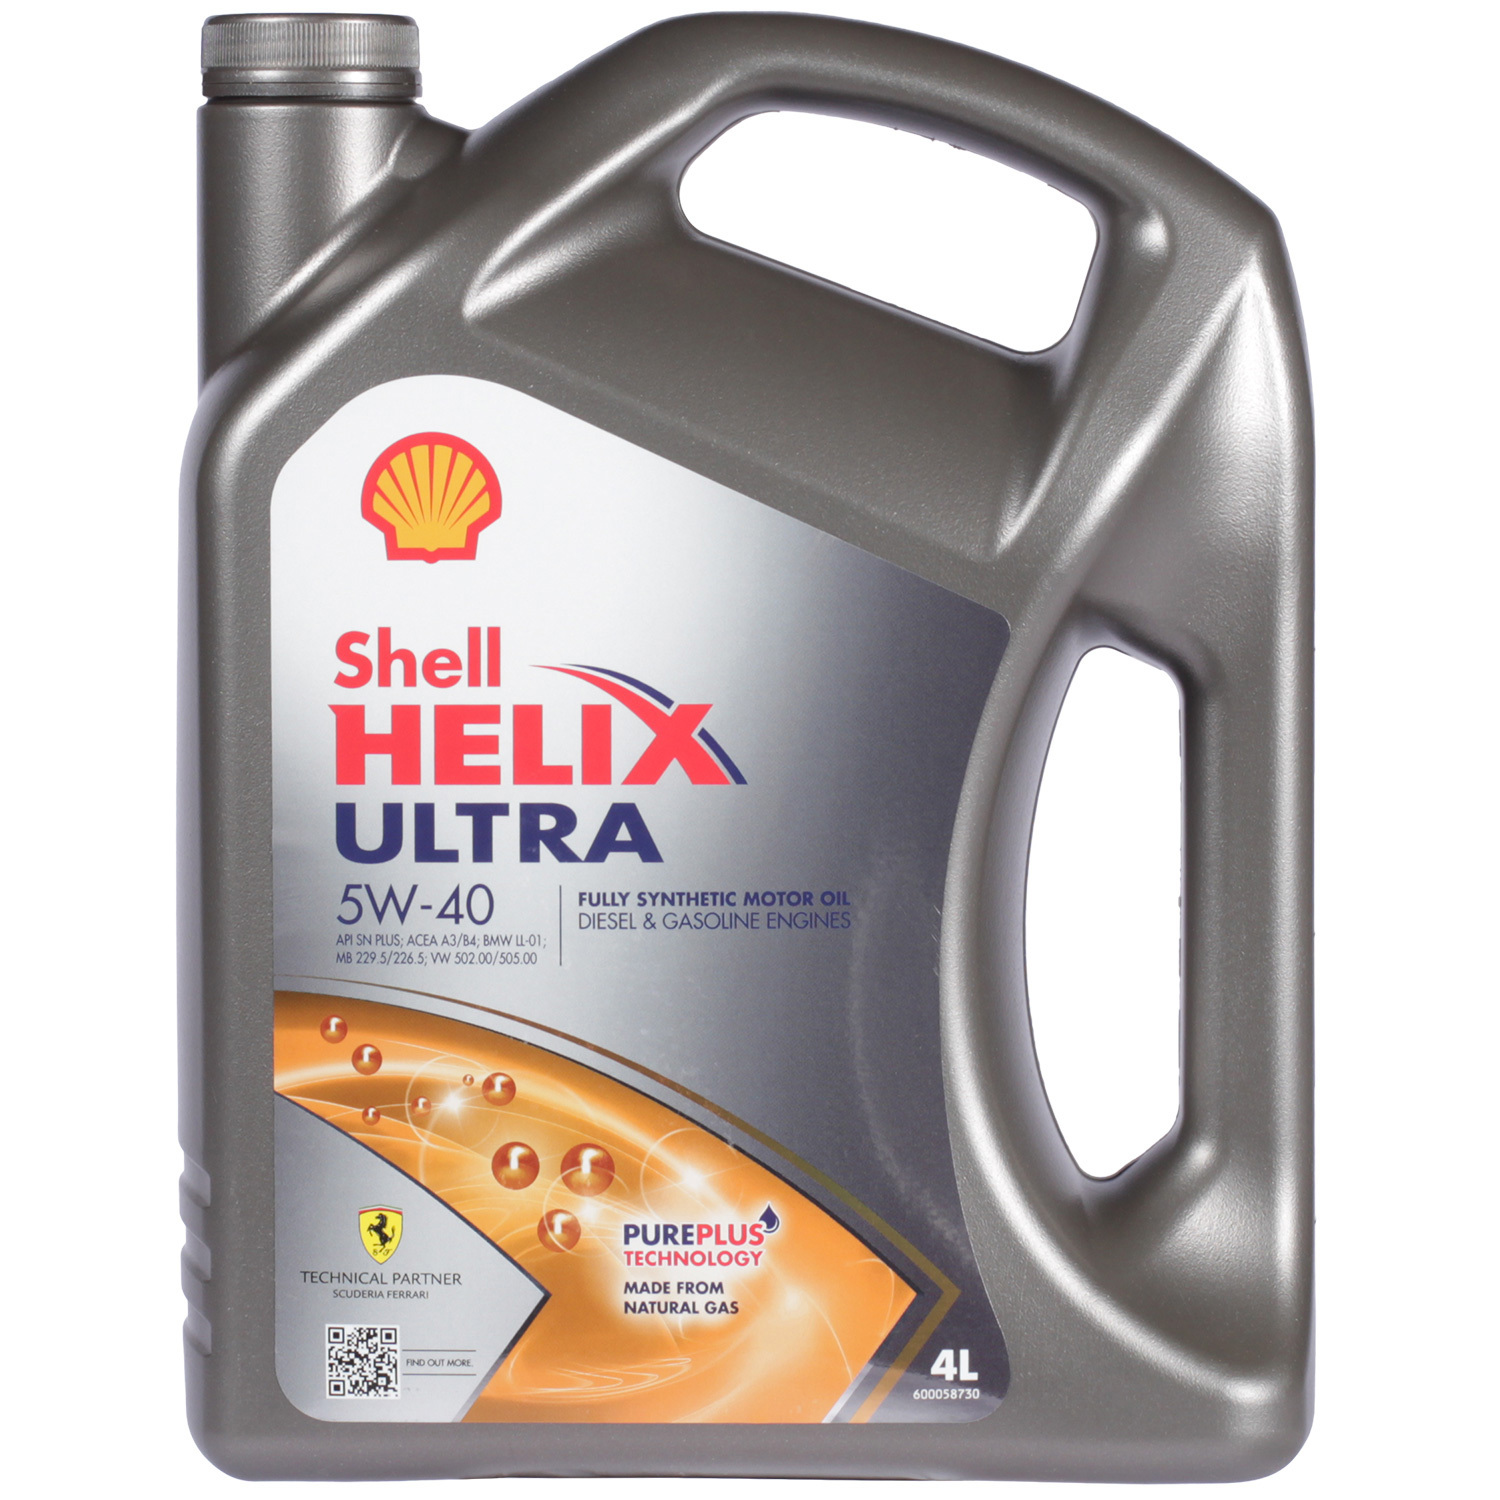 Shell Моторное масло Shell Helix Ultra 5W-40, 4 л shell моторное масло shell helix hx8 5w 30 1 л